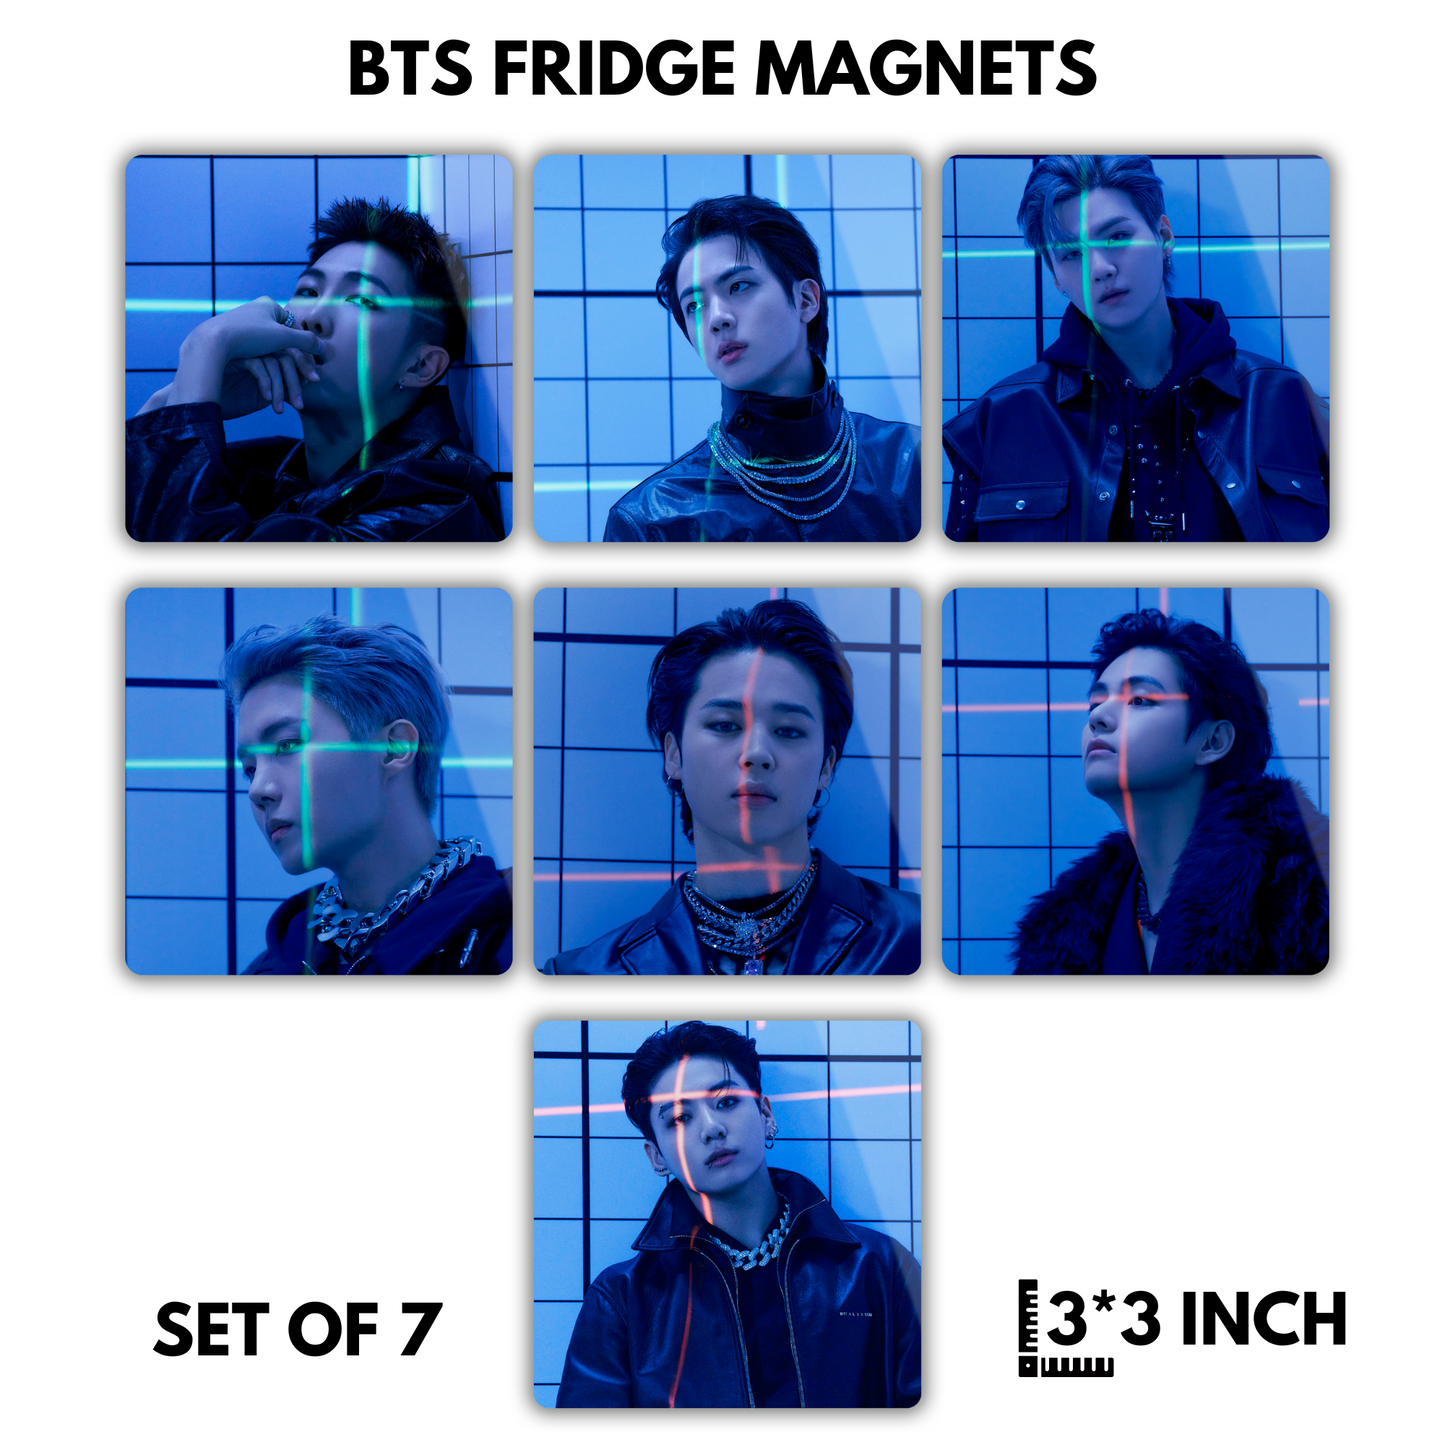 BTS Fridge Magnets - Set of 7